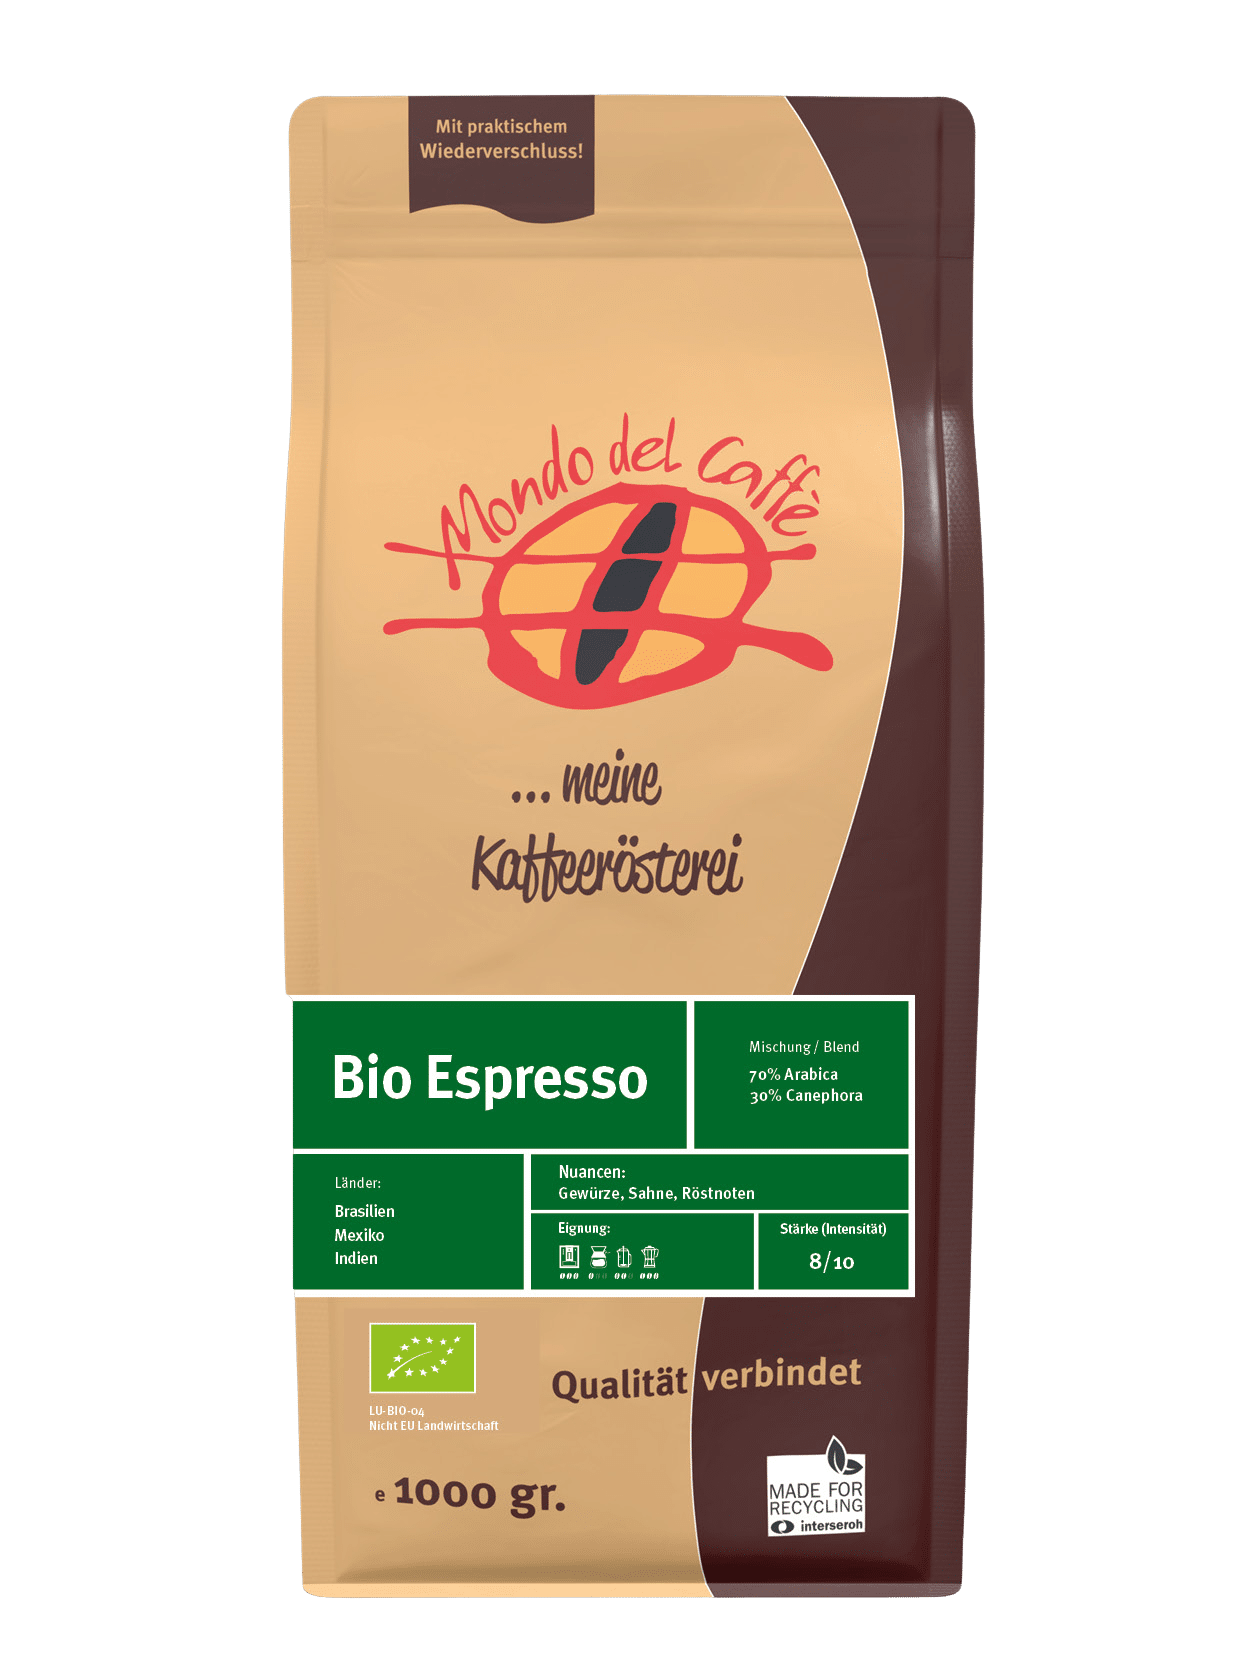 Organic espresso 70/30 top espresso organic certified